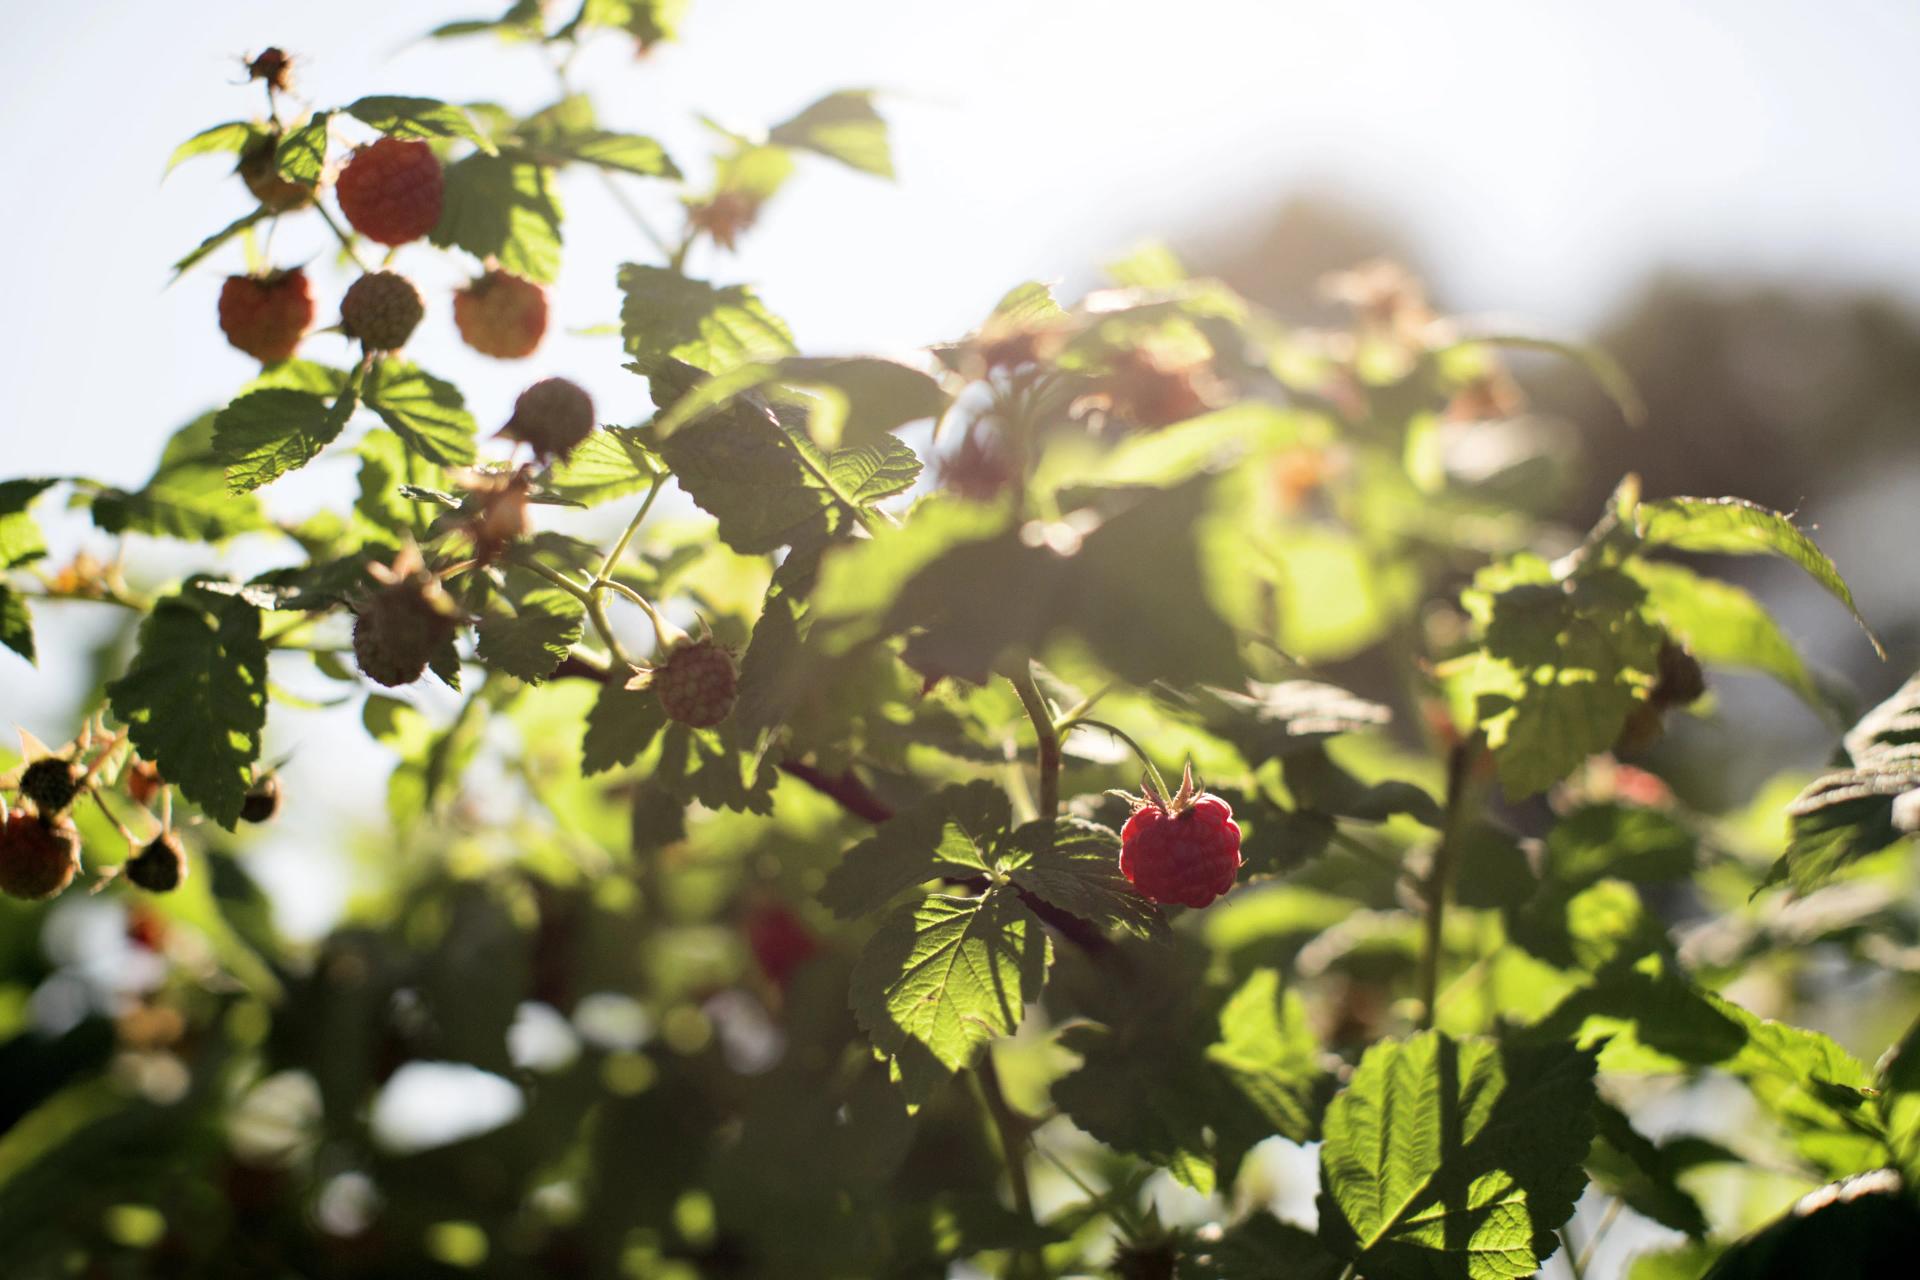 Raspberries in a Sun